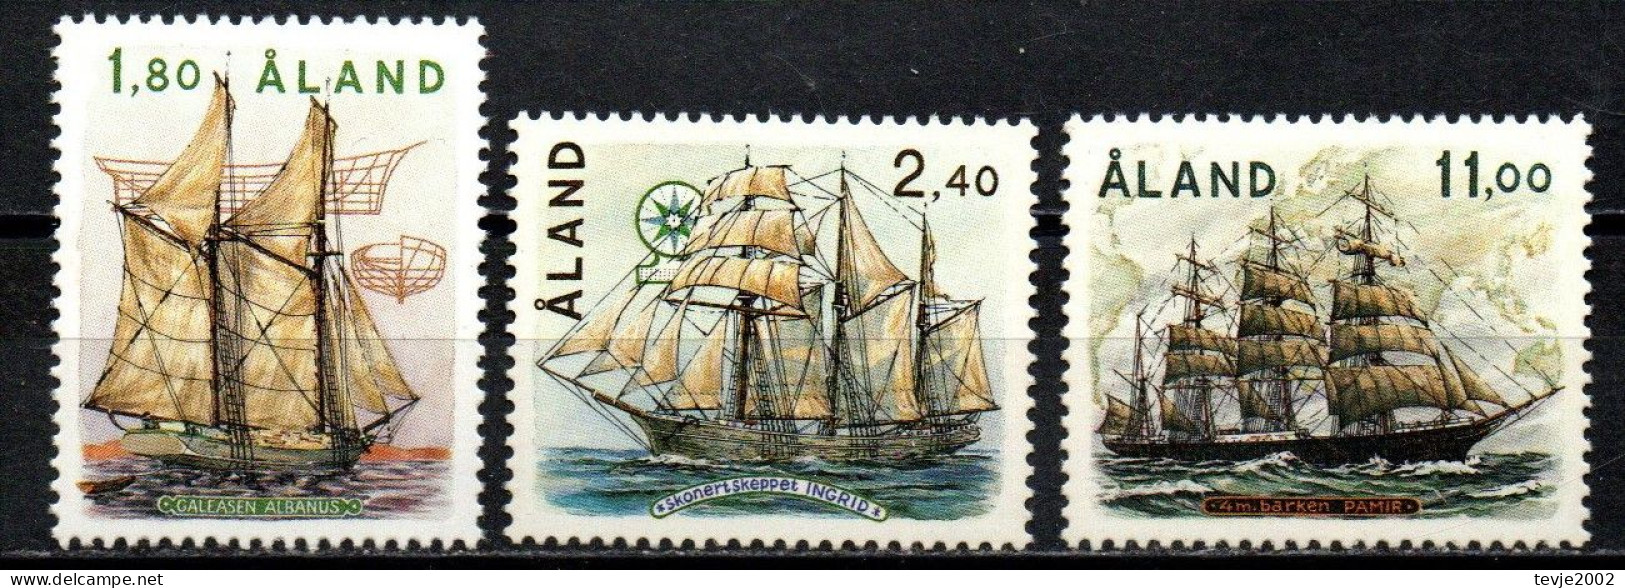 Aland 1988 - Mi.Nr. 28 - 30 - Postfrisch MNH - Segelschiffe Sailing Ships - Schiffe